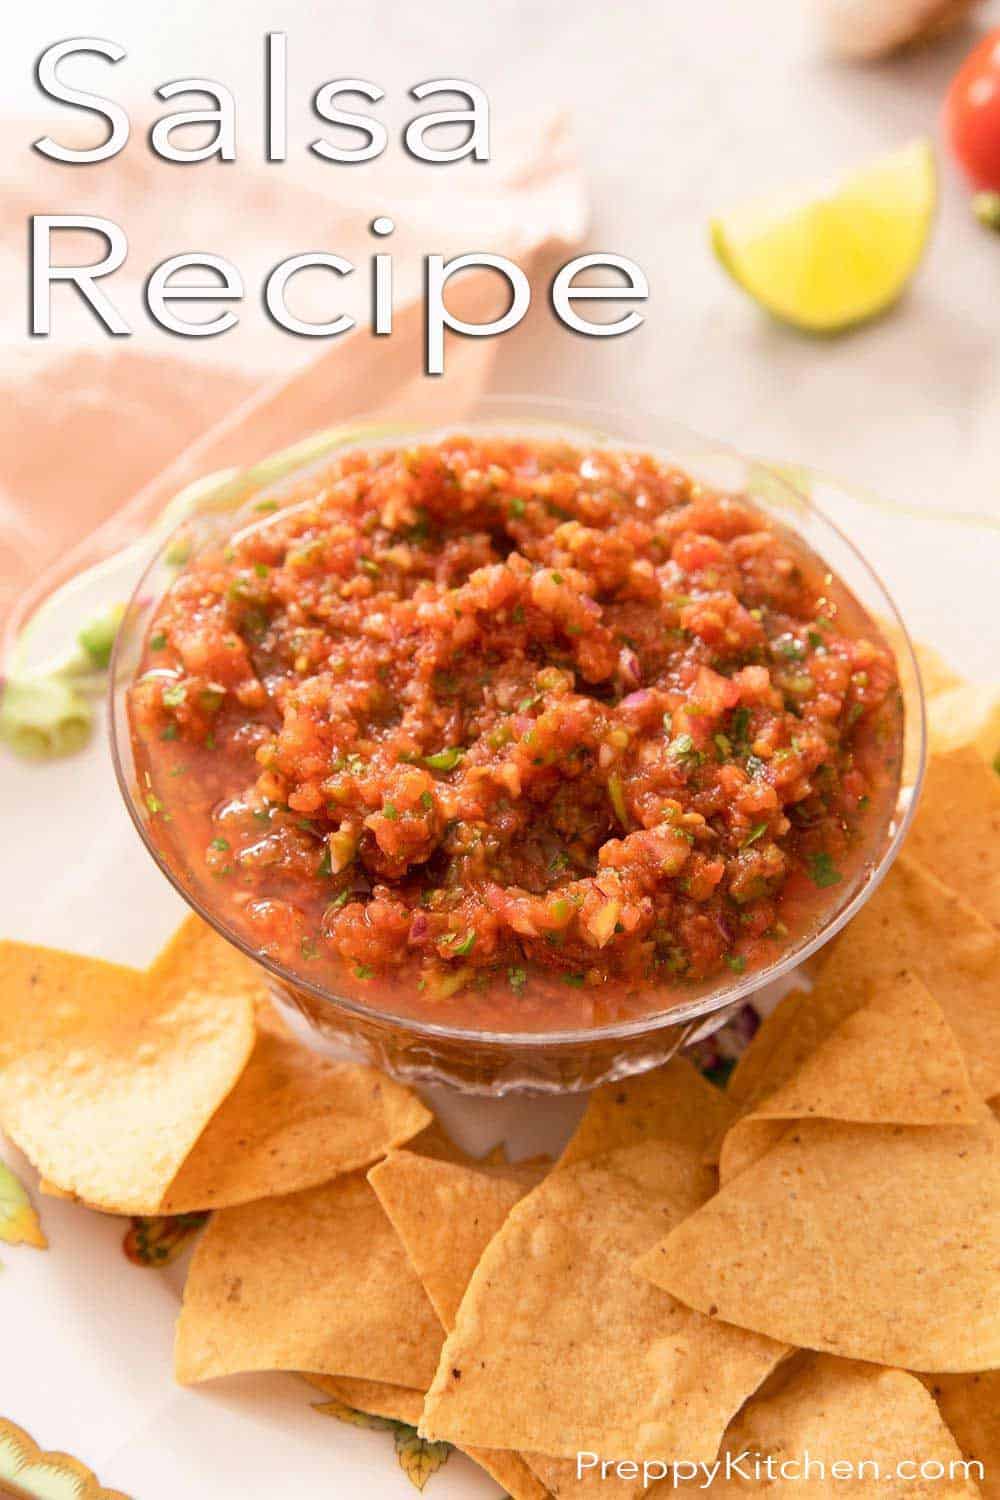 Salsa Recipe - Preppy Kitchen